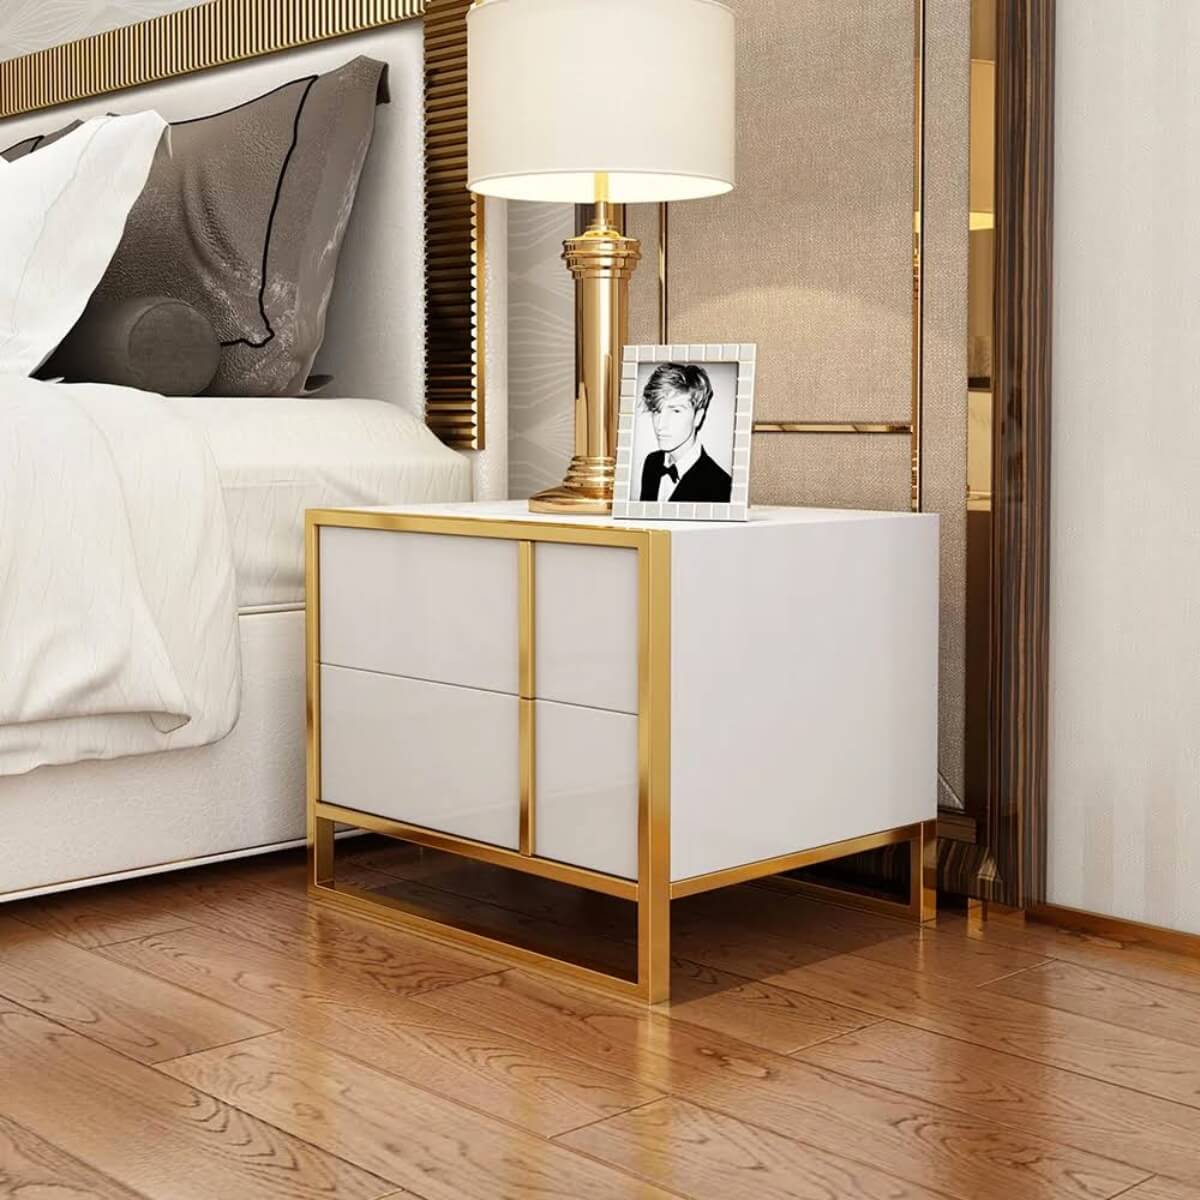 Zara-Bedside-Table-elegant-interior-1